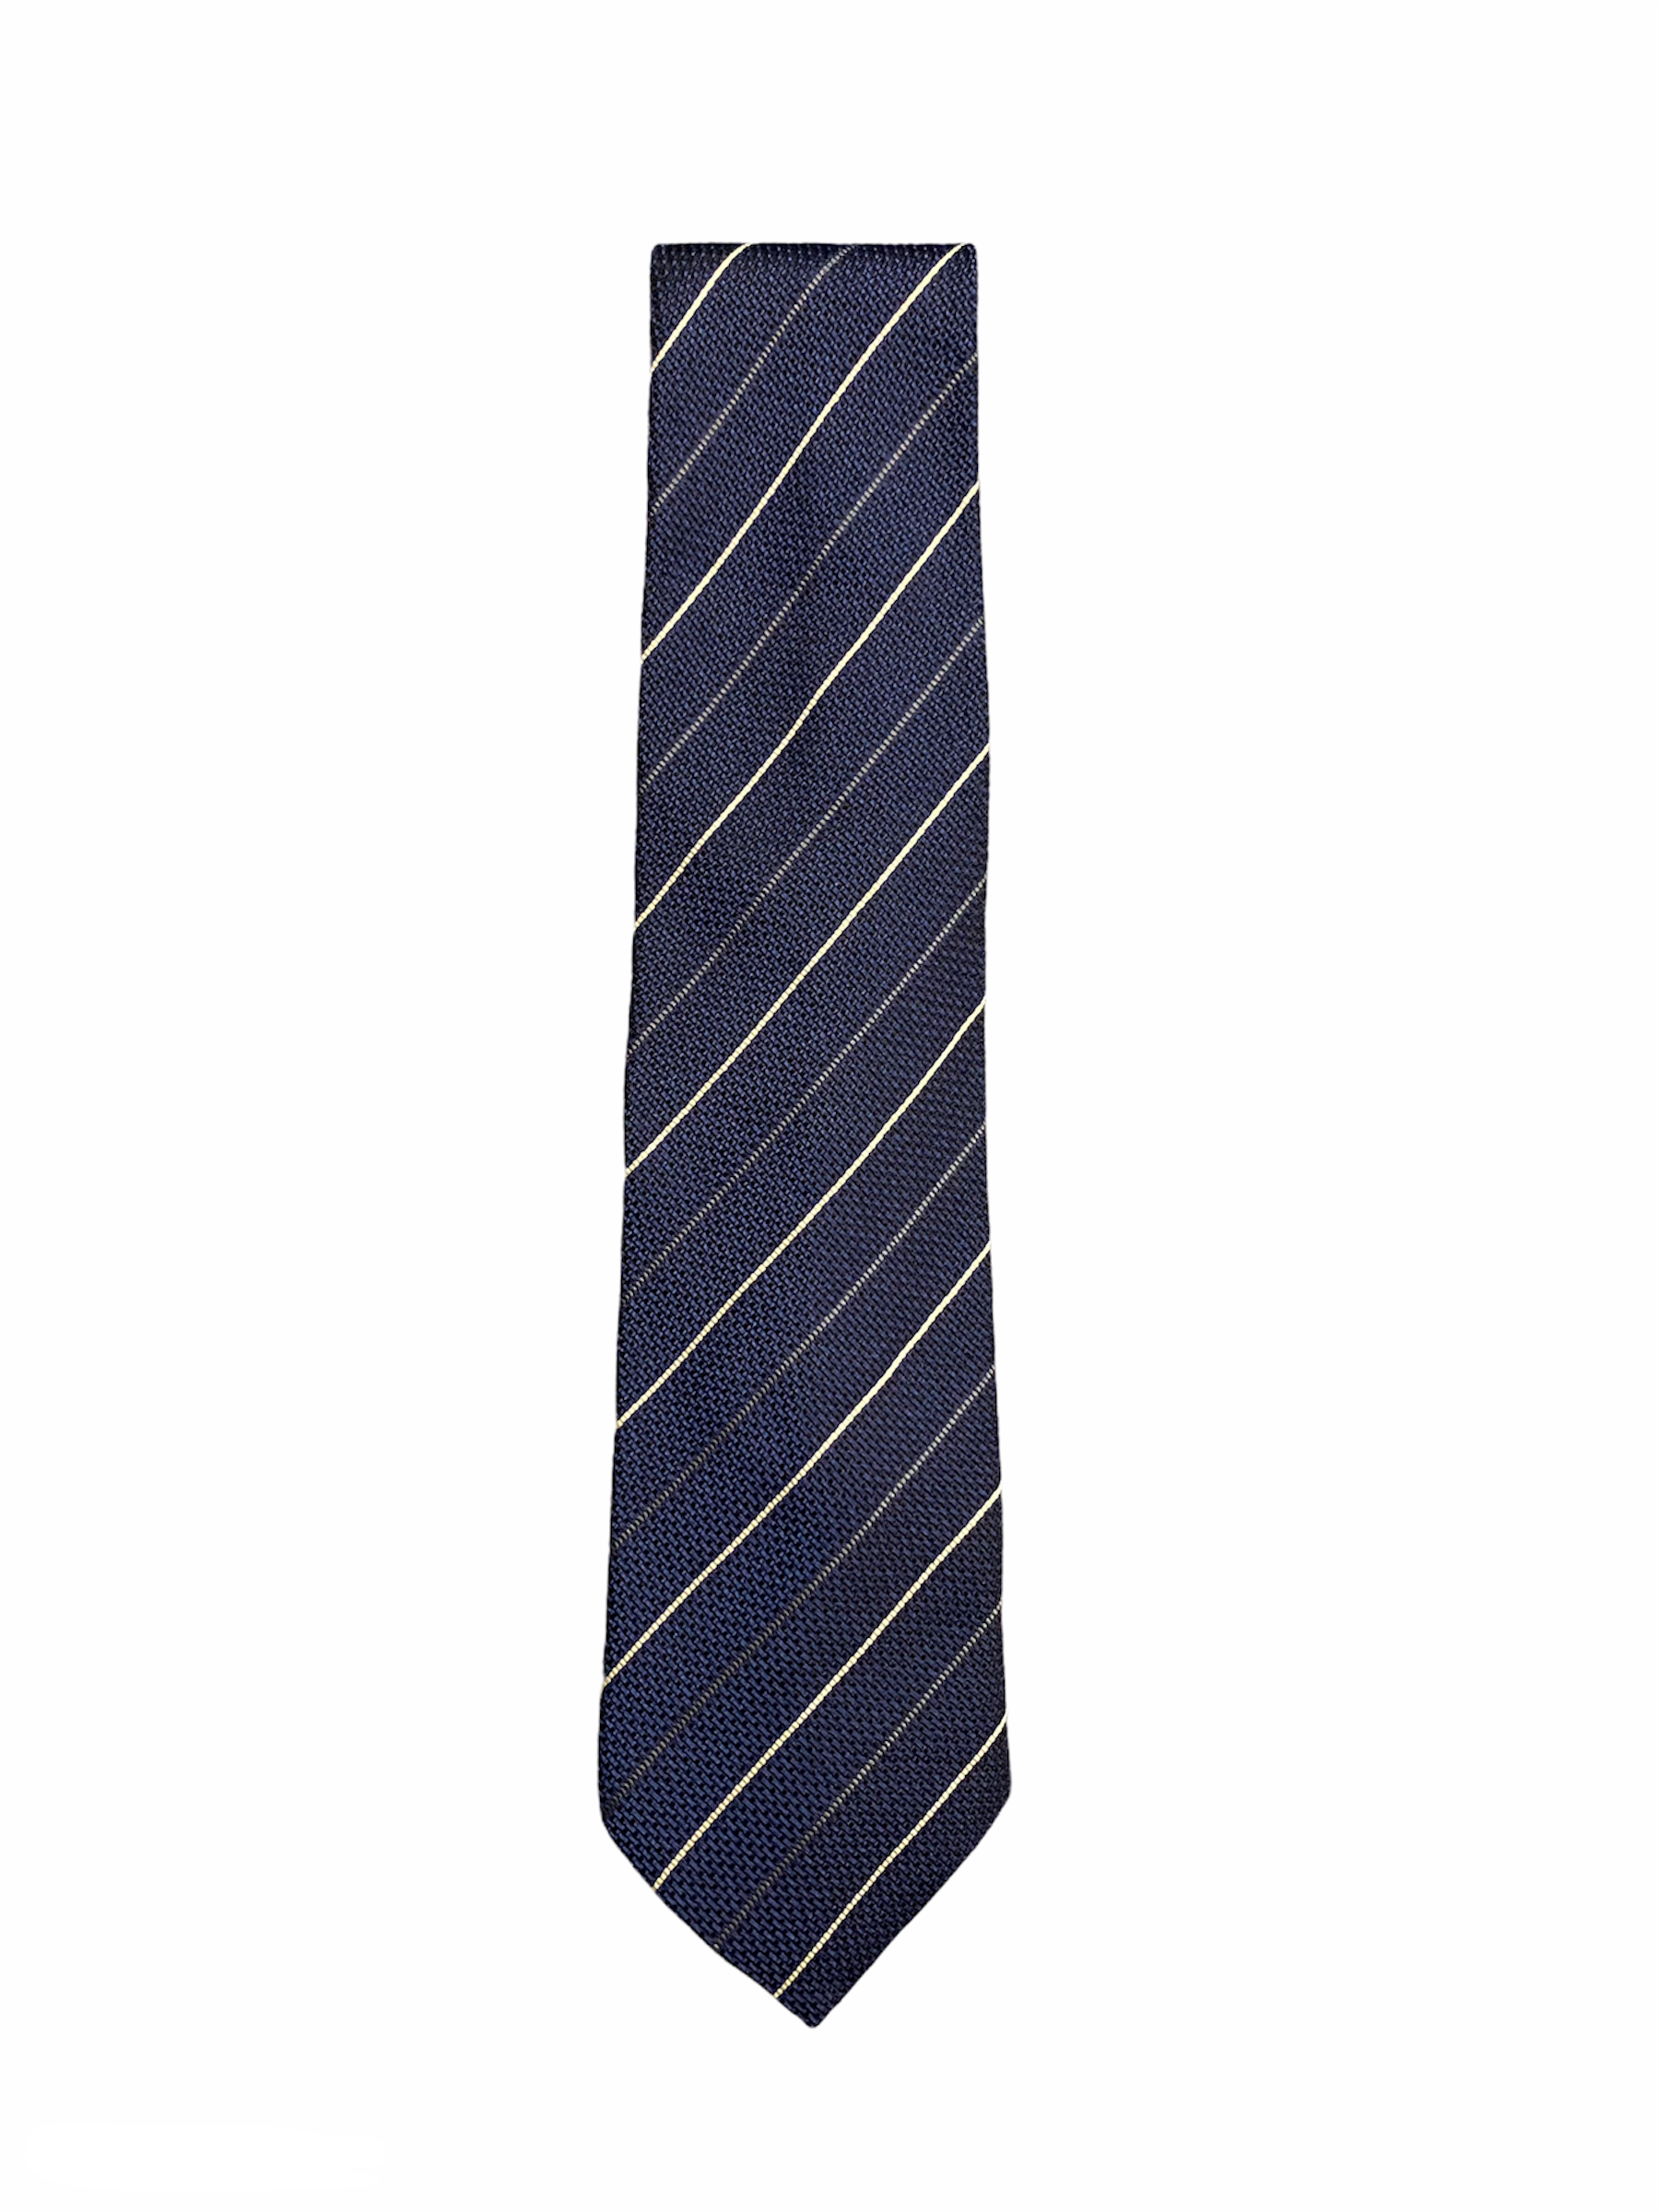 Cravate HUGO BOSS bleue à fines rayures blanches, 100% soie.